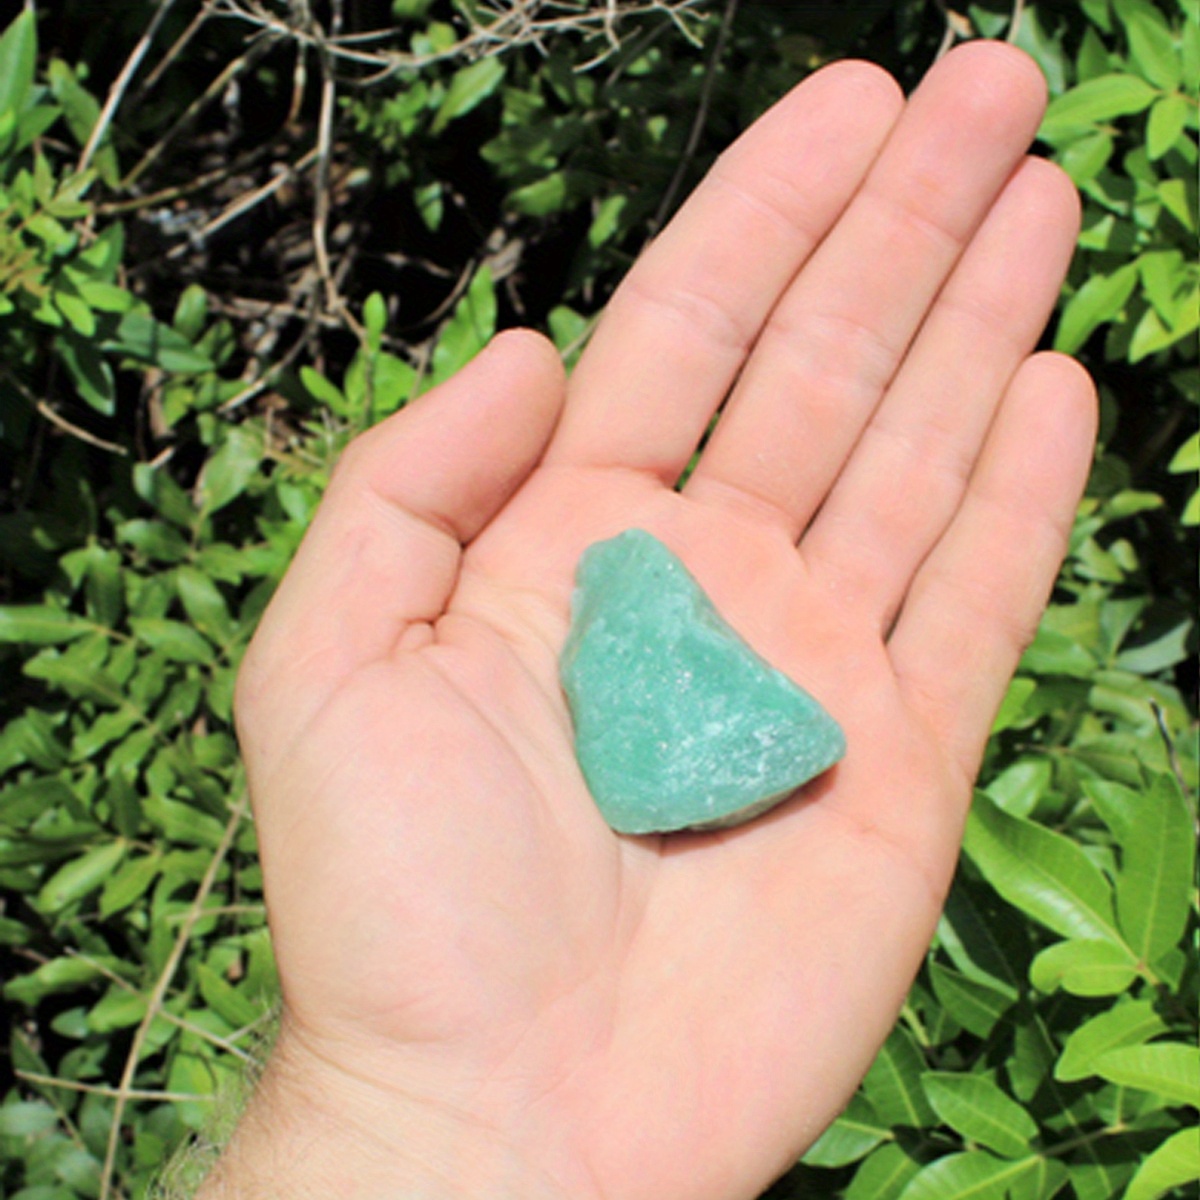 GREEN AVENTURINE (Grade A Natural) Tumbled Polished Stones Gemstone Rocks  for Healing, Yoga, Meditation, Reiki, Crafts, Jewelry Supplies